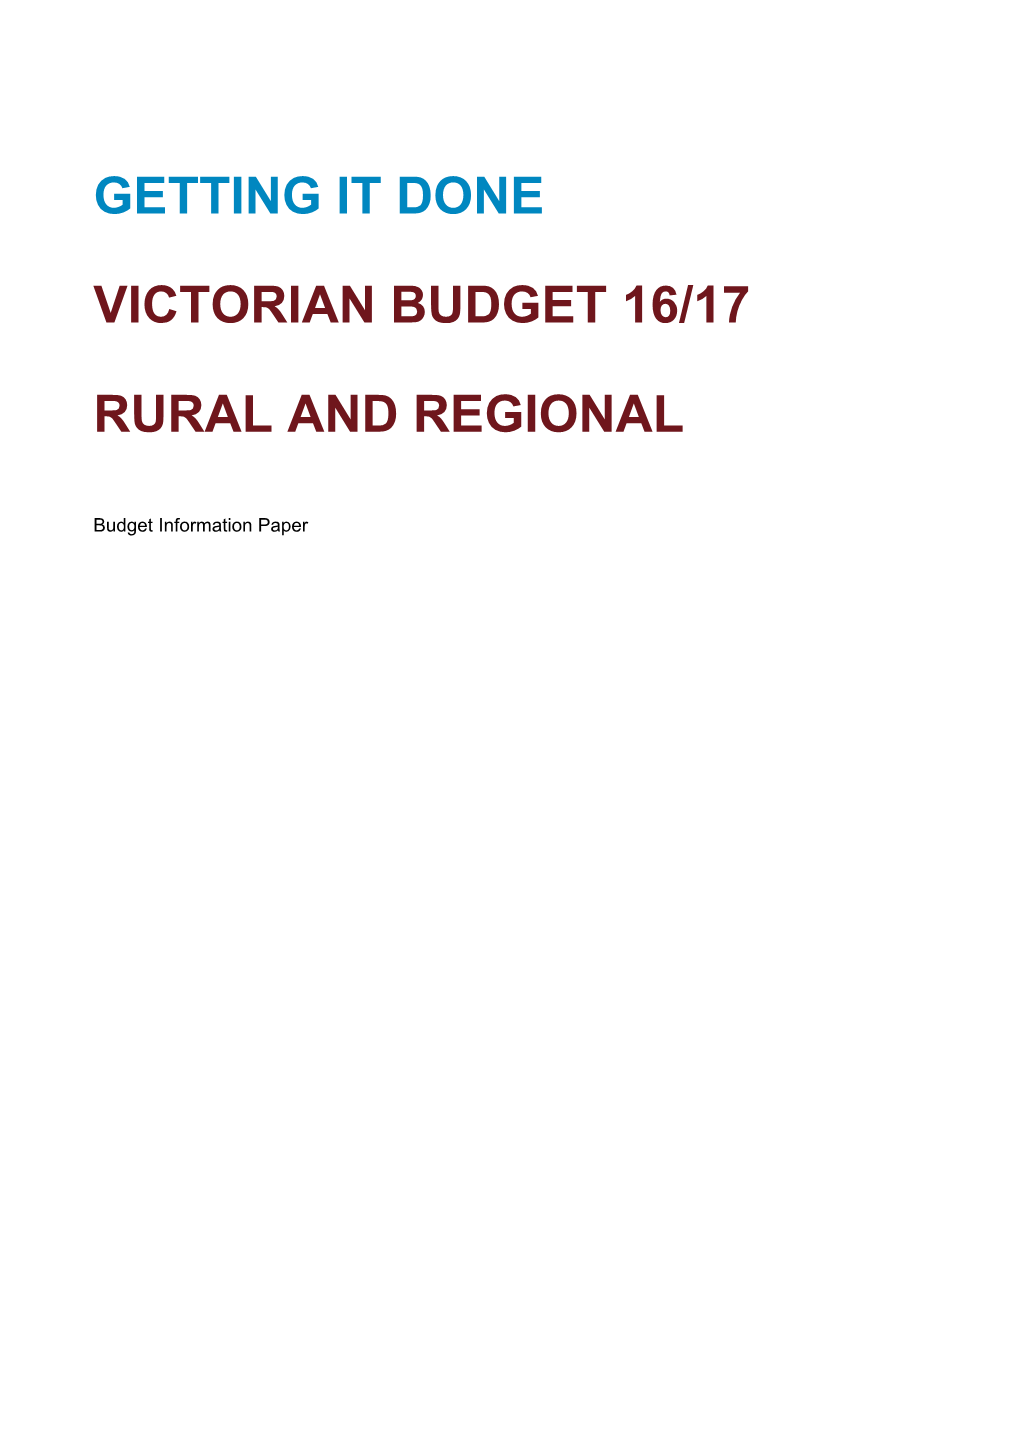 Victorian Budget 16/17